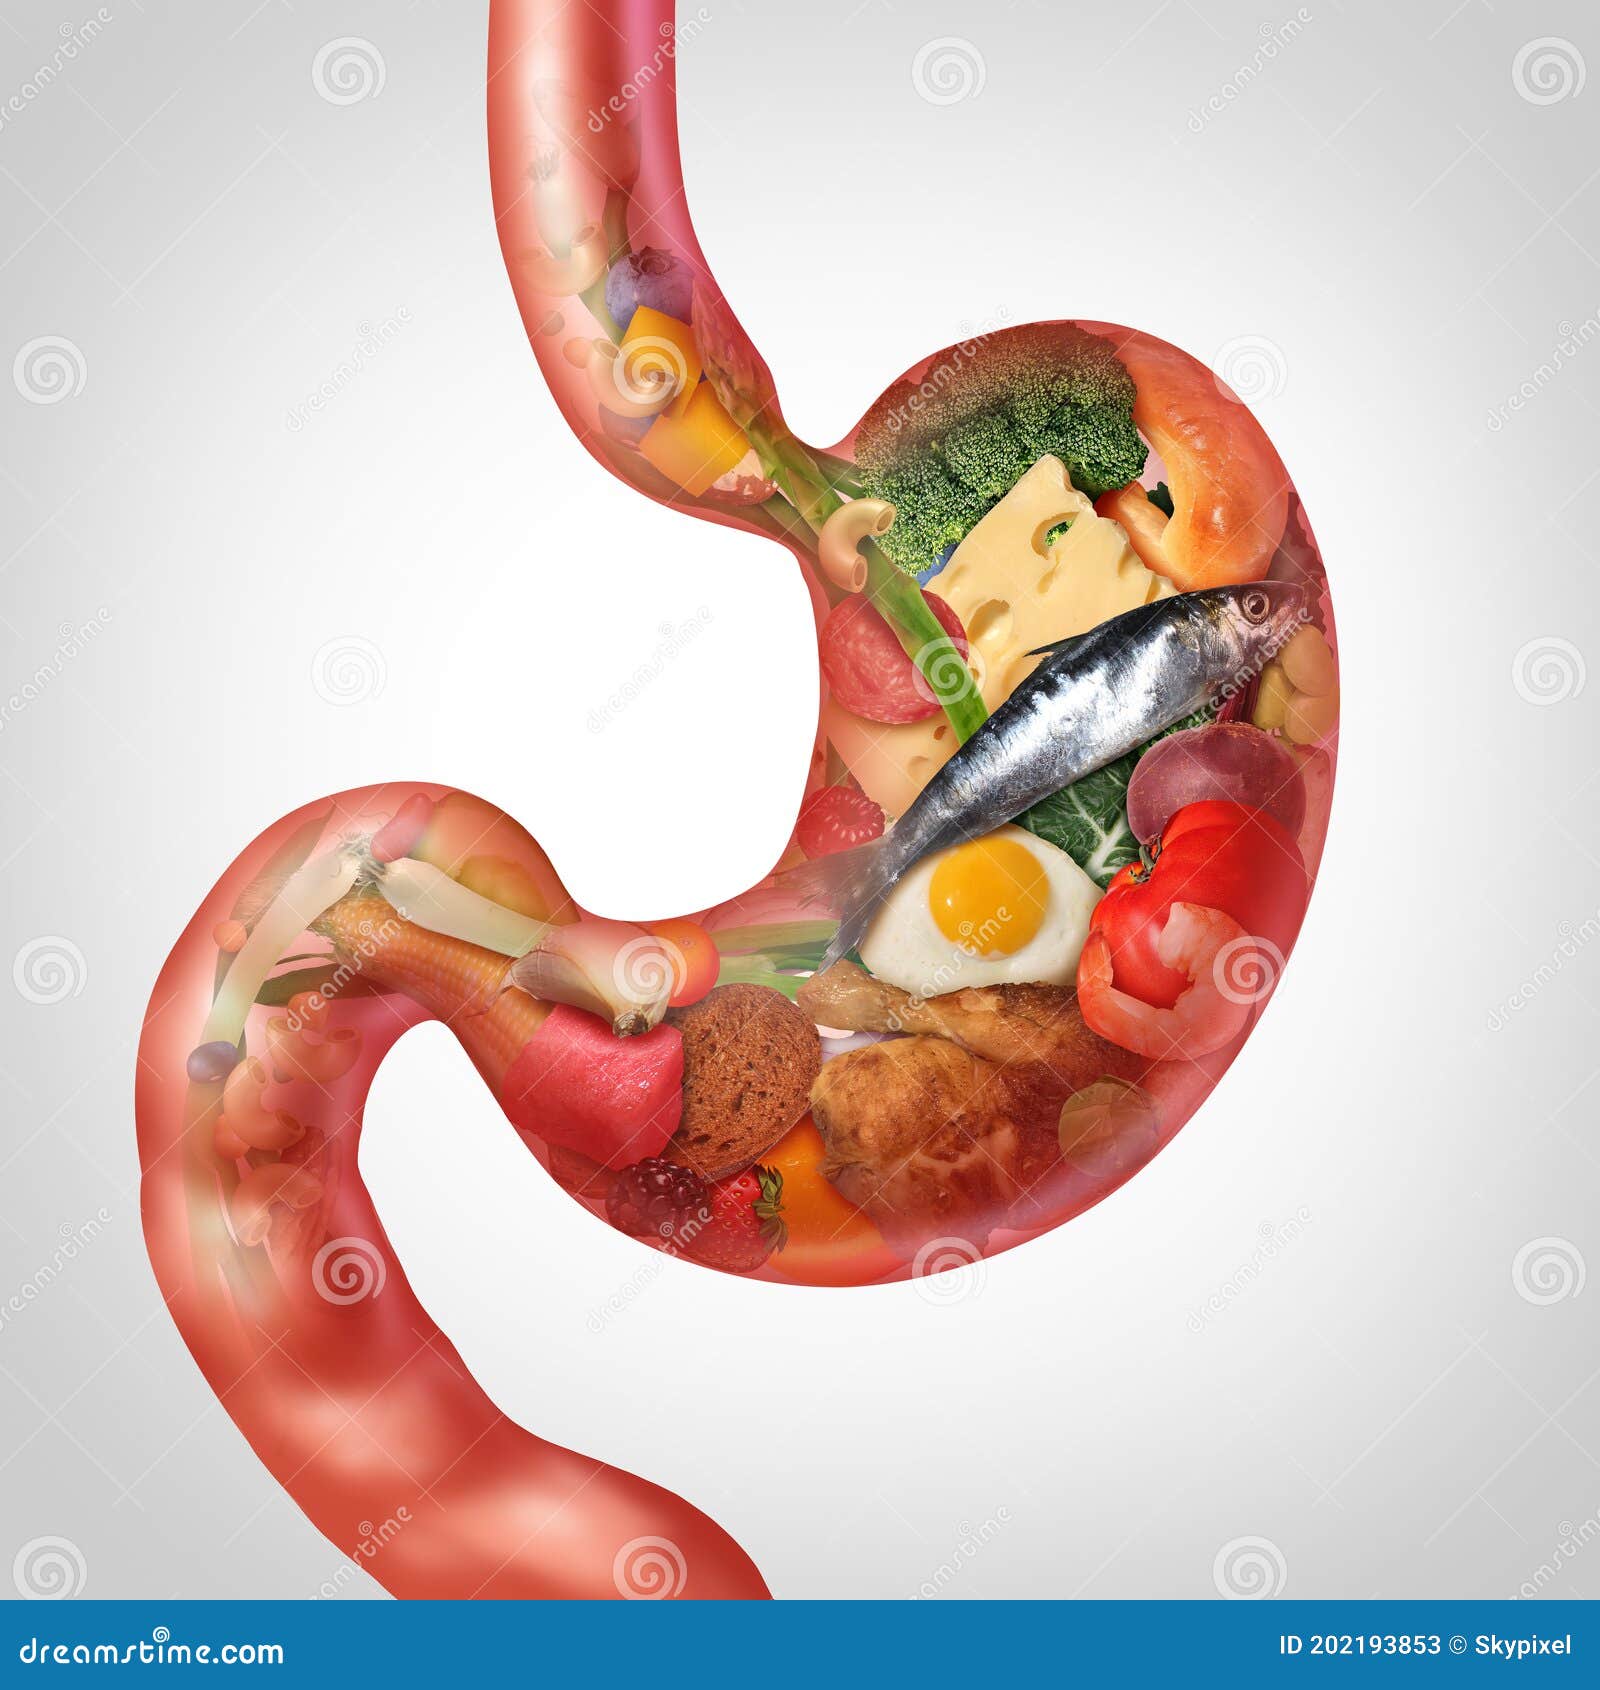 Food Digestion stock illustration. Illustration of human - 202193853